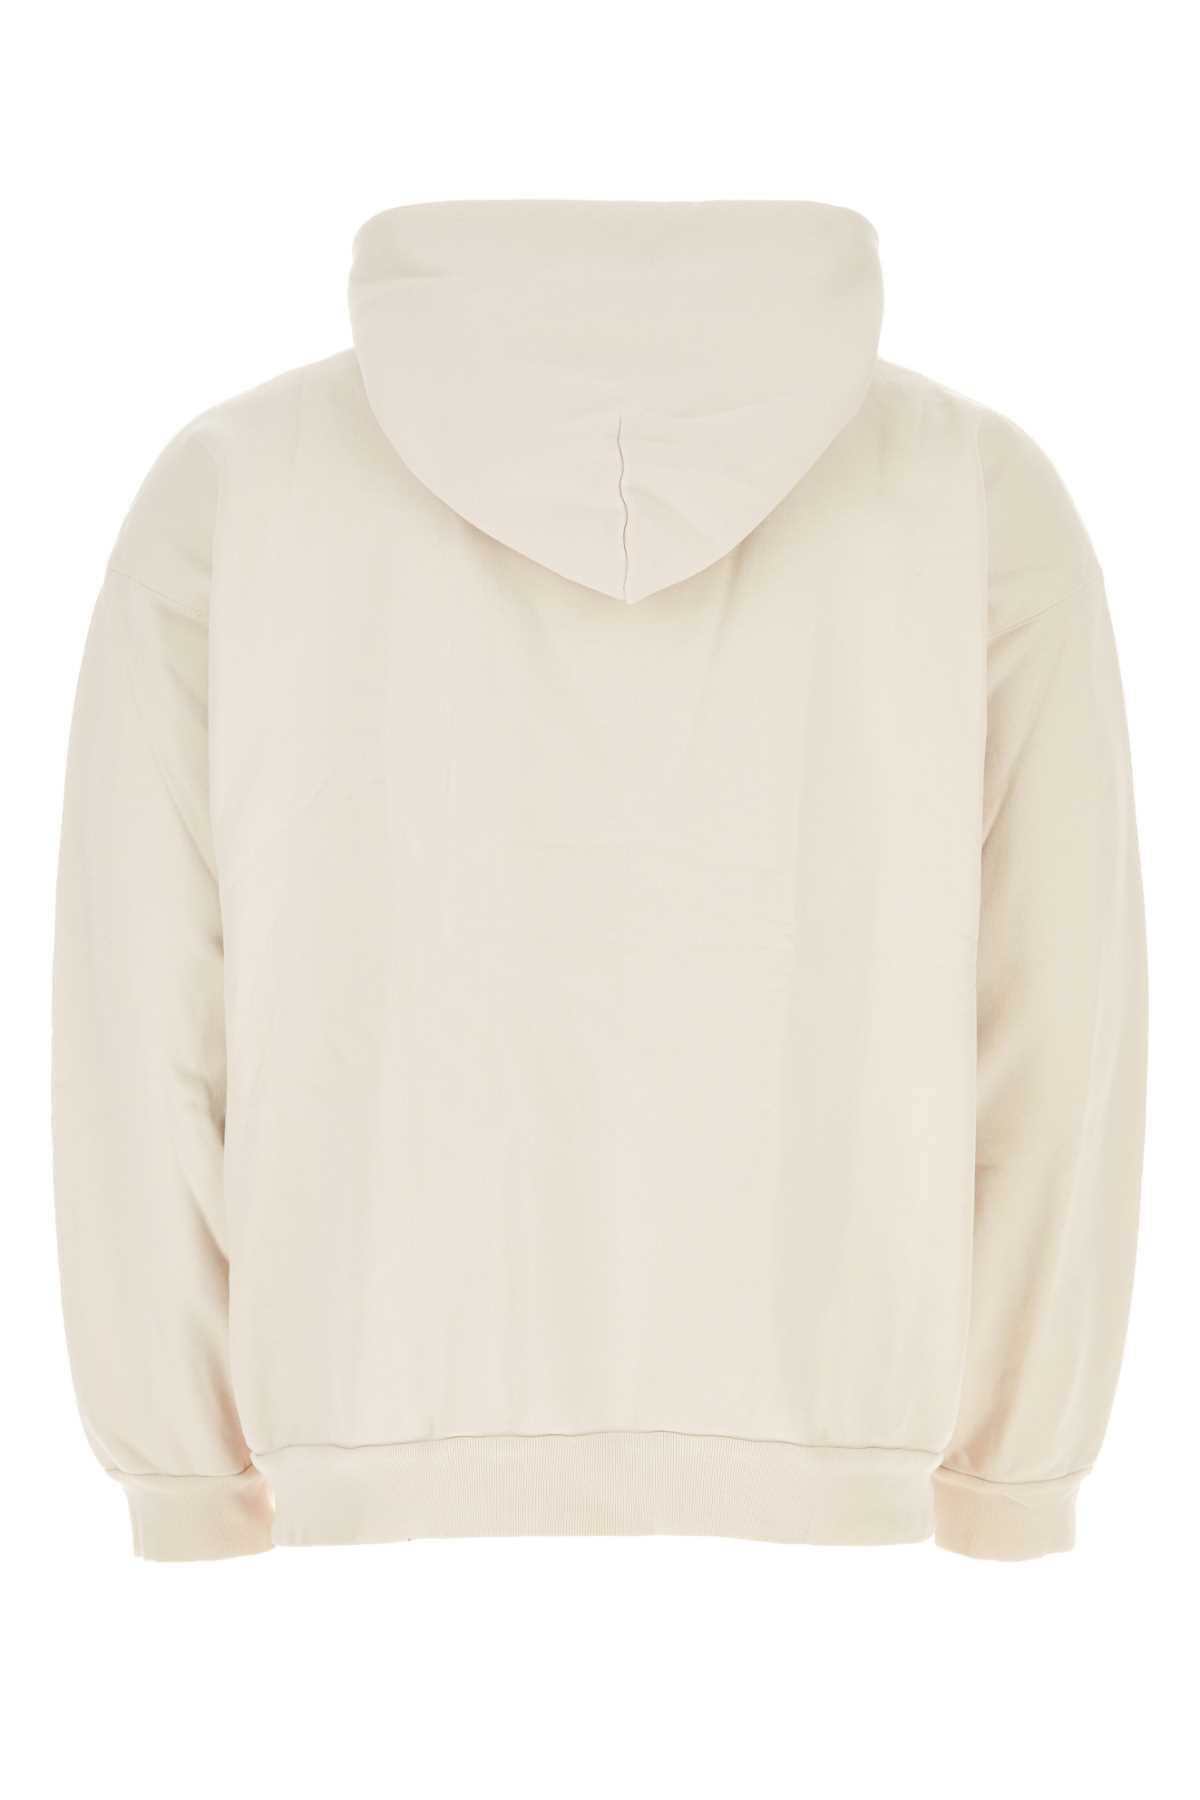 Shop Balenciaga Ivory Cotton Sweatshirt In Ecrublack